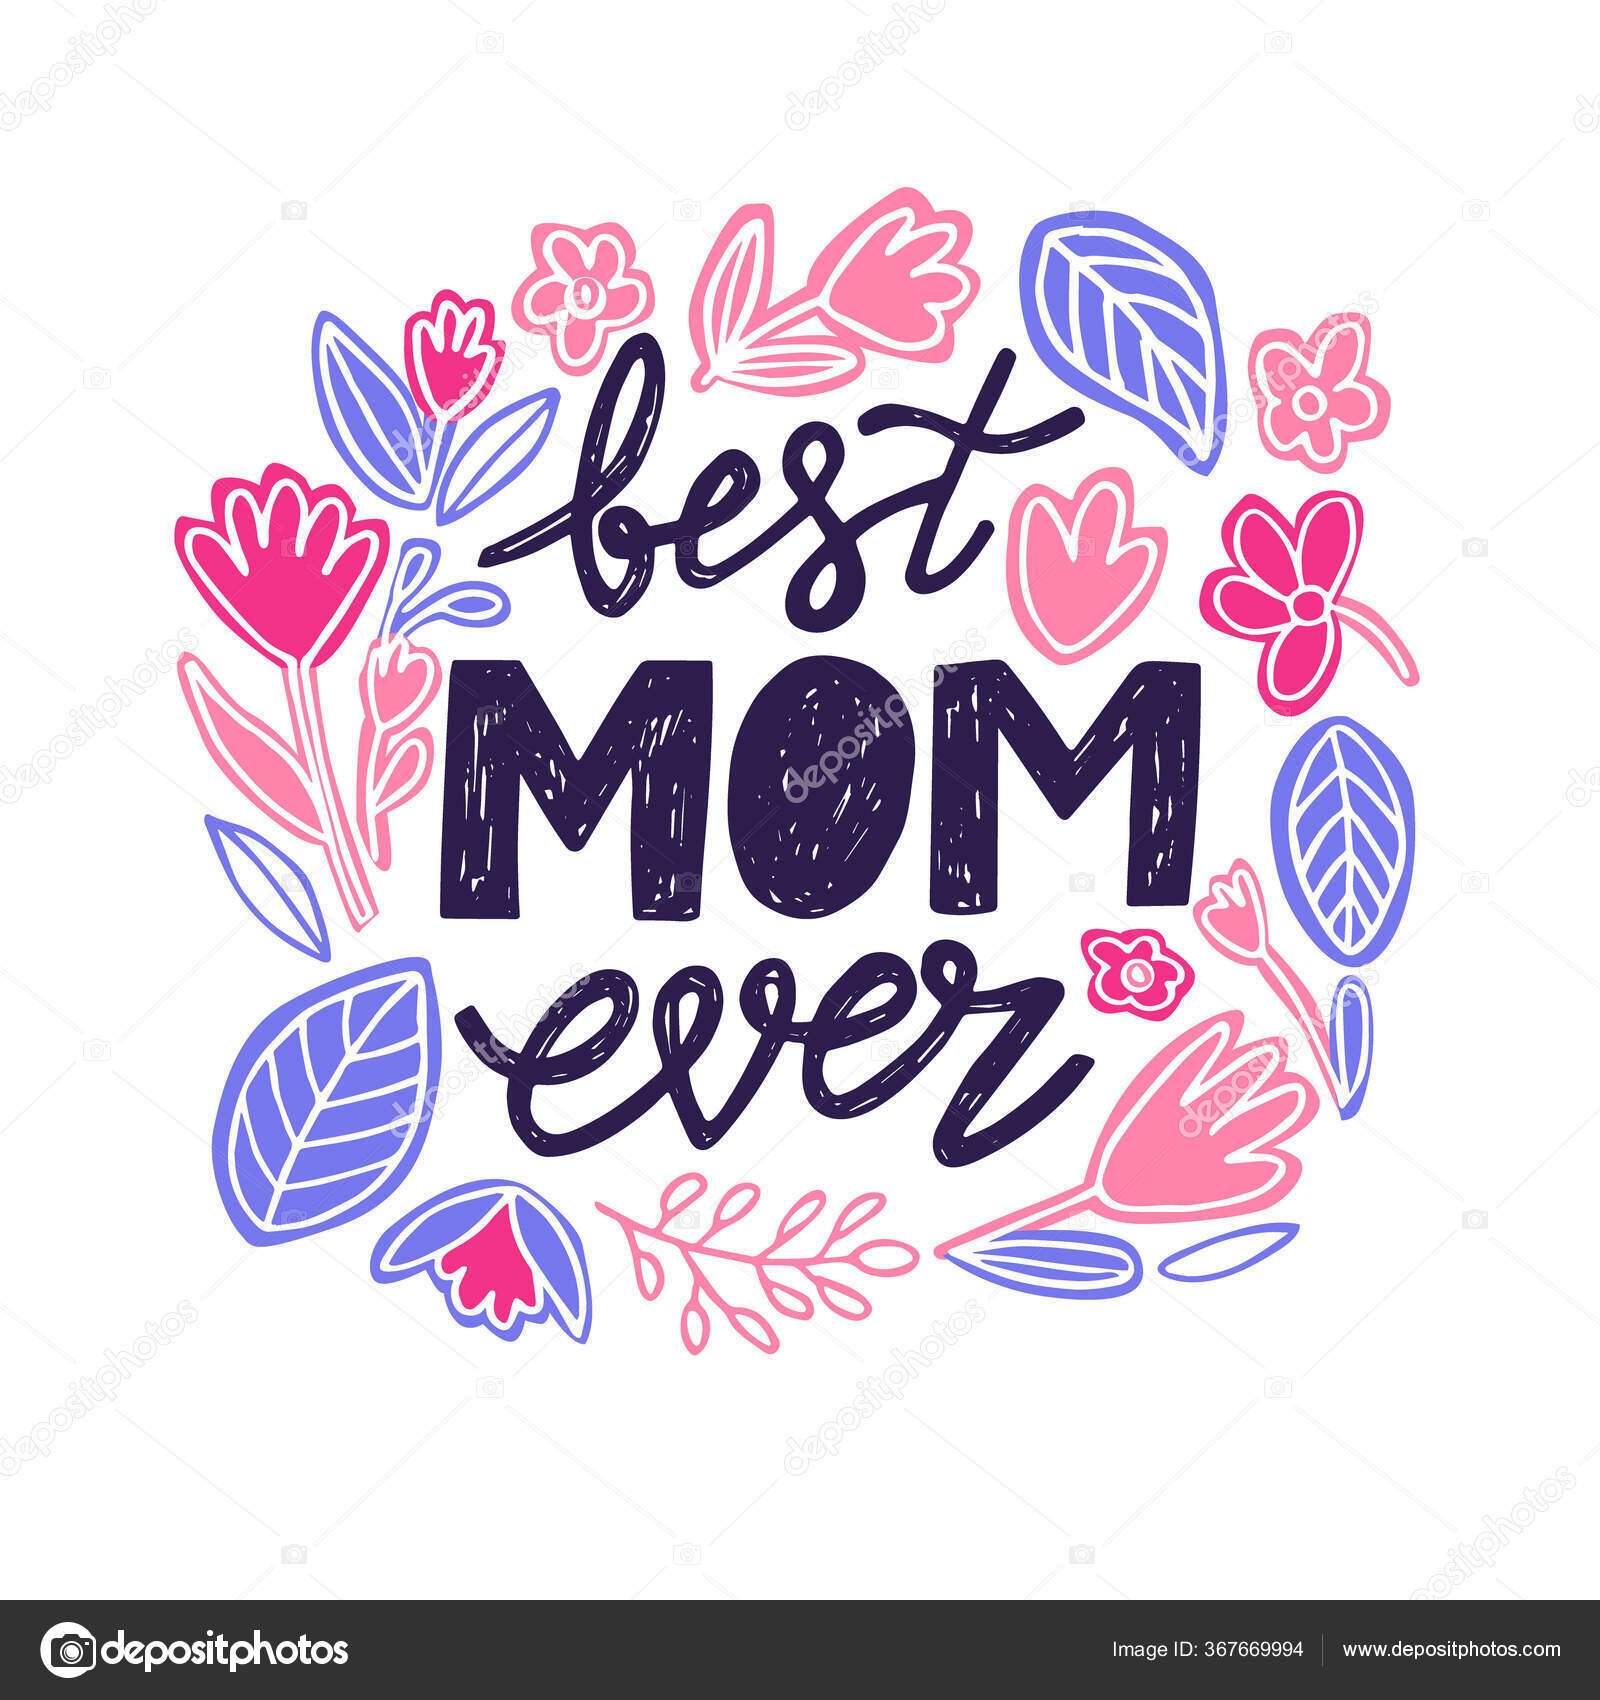 https://st3.depositphotos.com/1621048/36766/v/1600/depositphotos_367669994-stock-illustration-vector-illustration-best-mom-ever.jpg